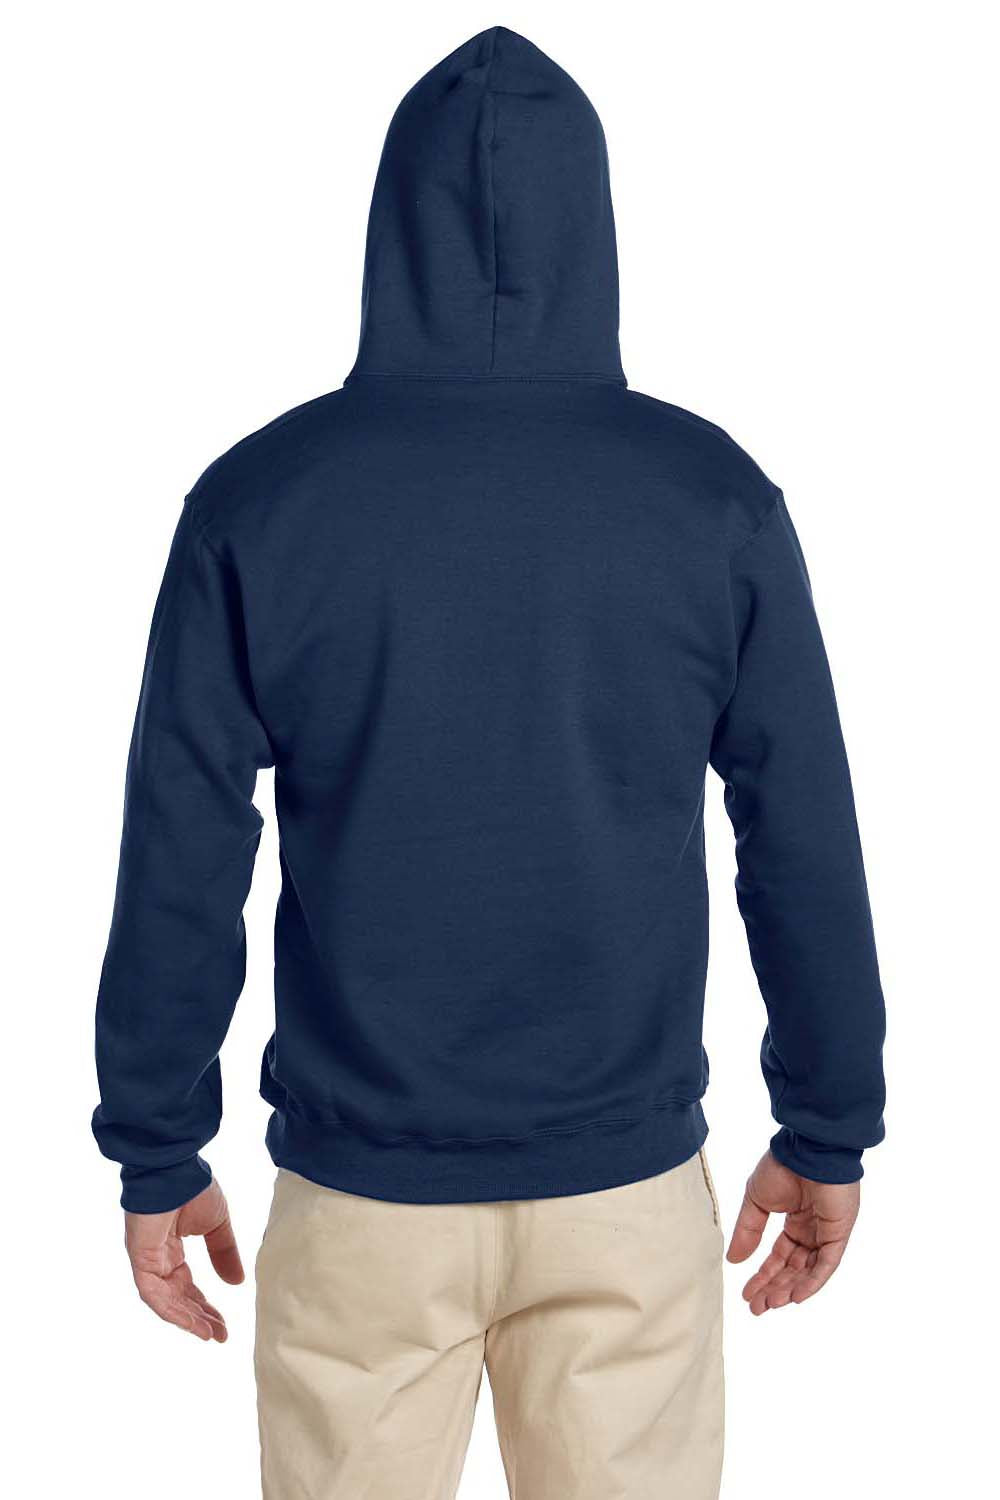 Jerzees 4997 Mens Super Sweats NuBlend Fleece Hooded Sweatshirt Hoodie Navy Blue Back